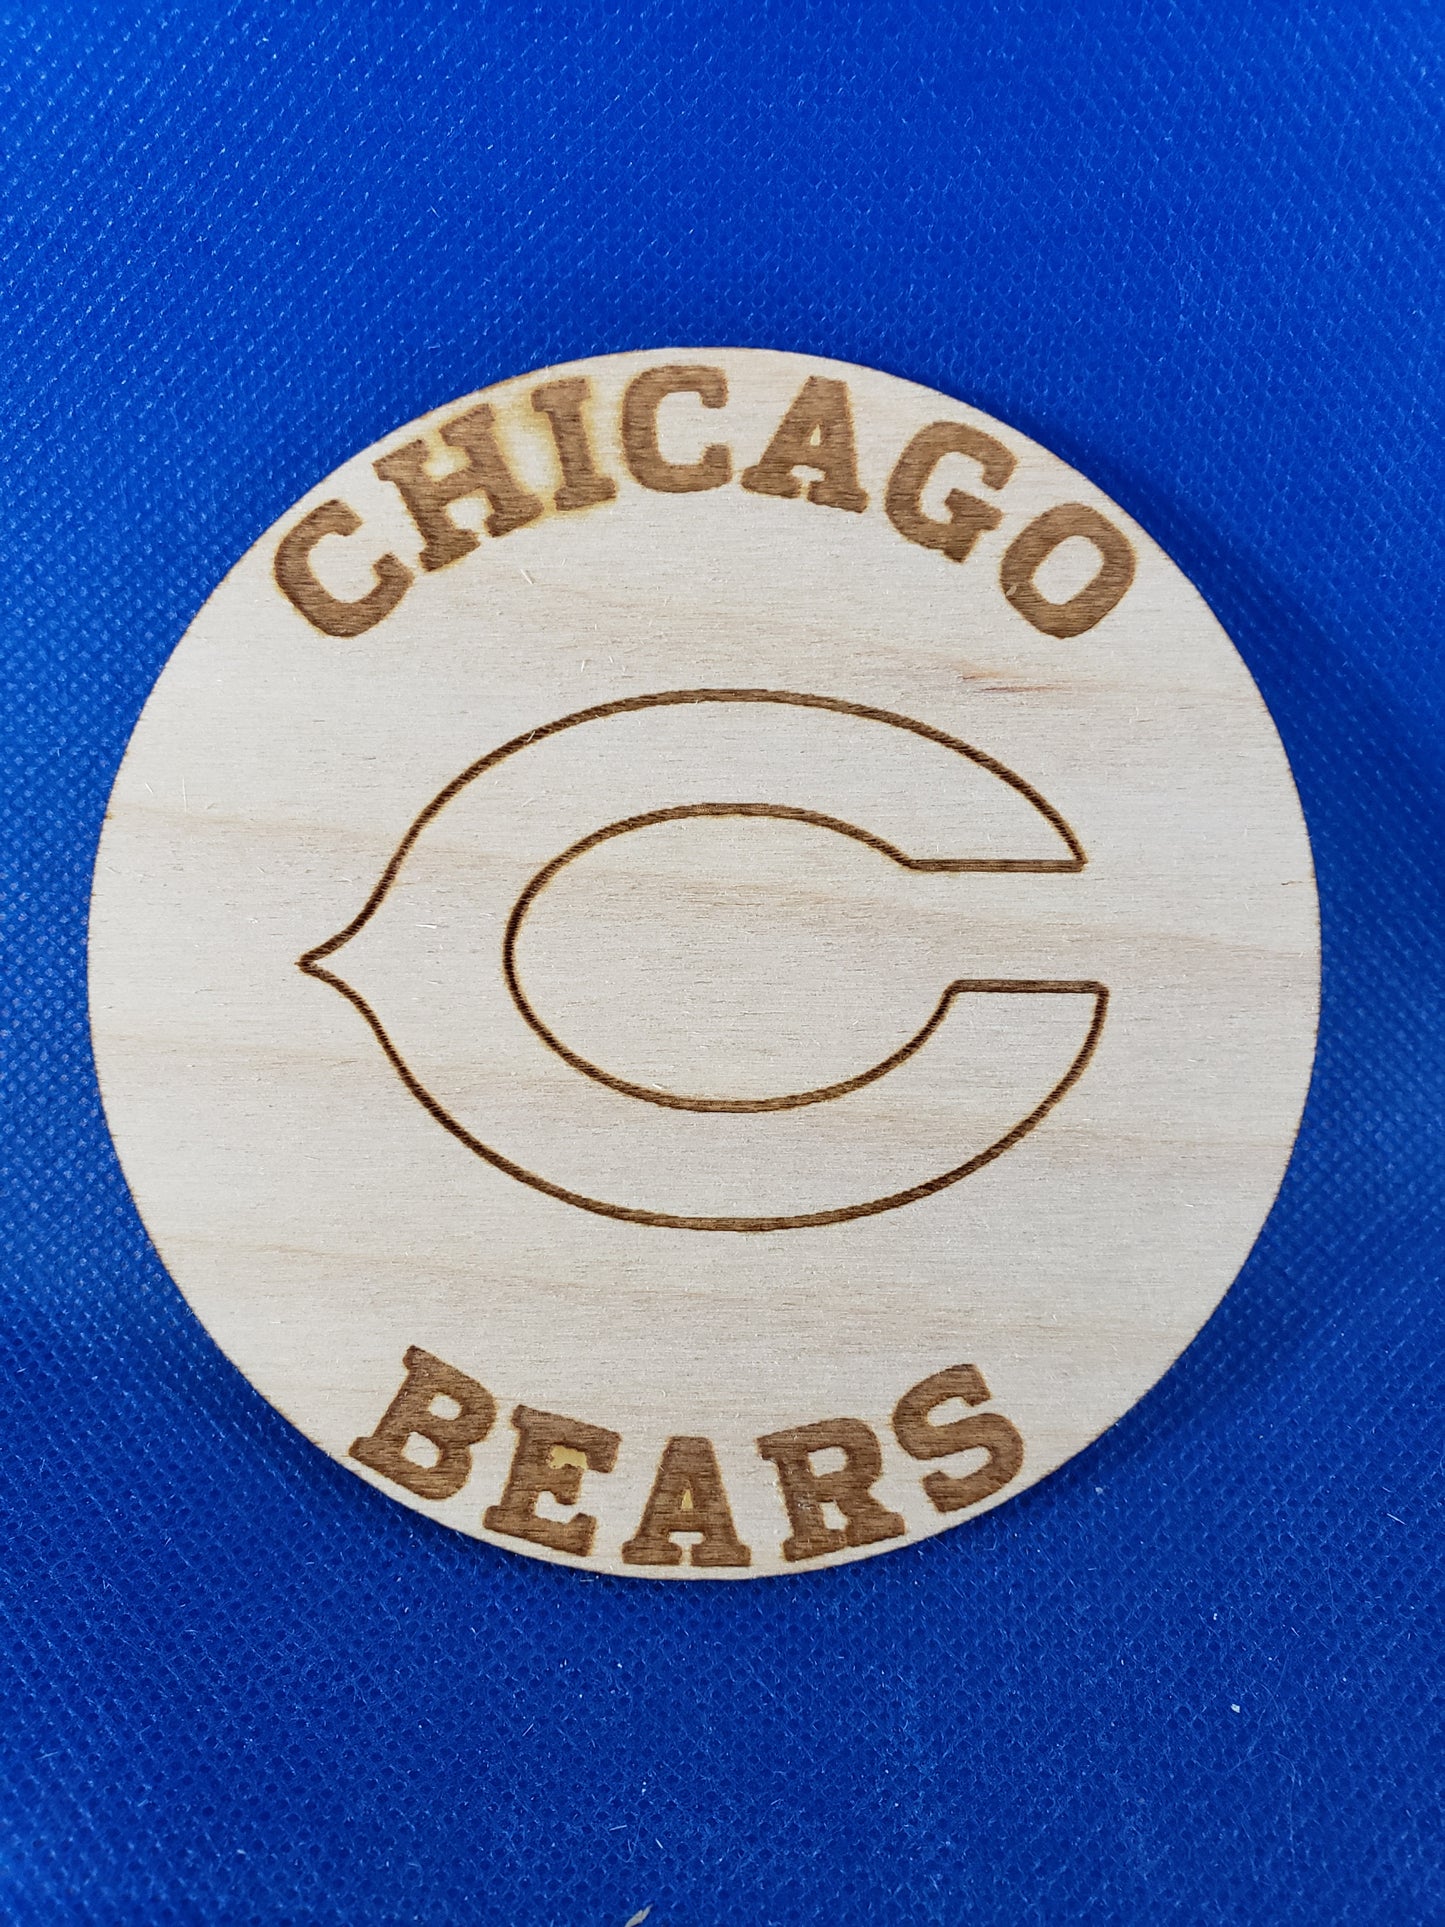 Bears Logo Round-Laser cut natural wooden blank